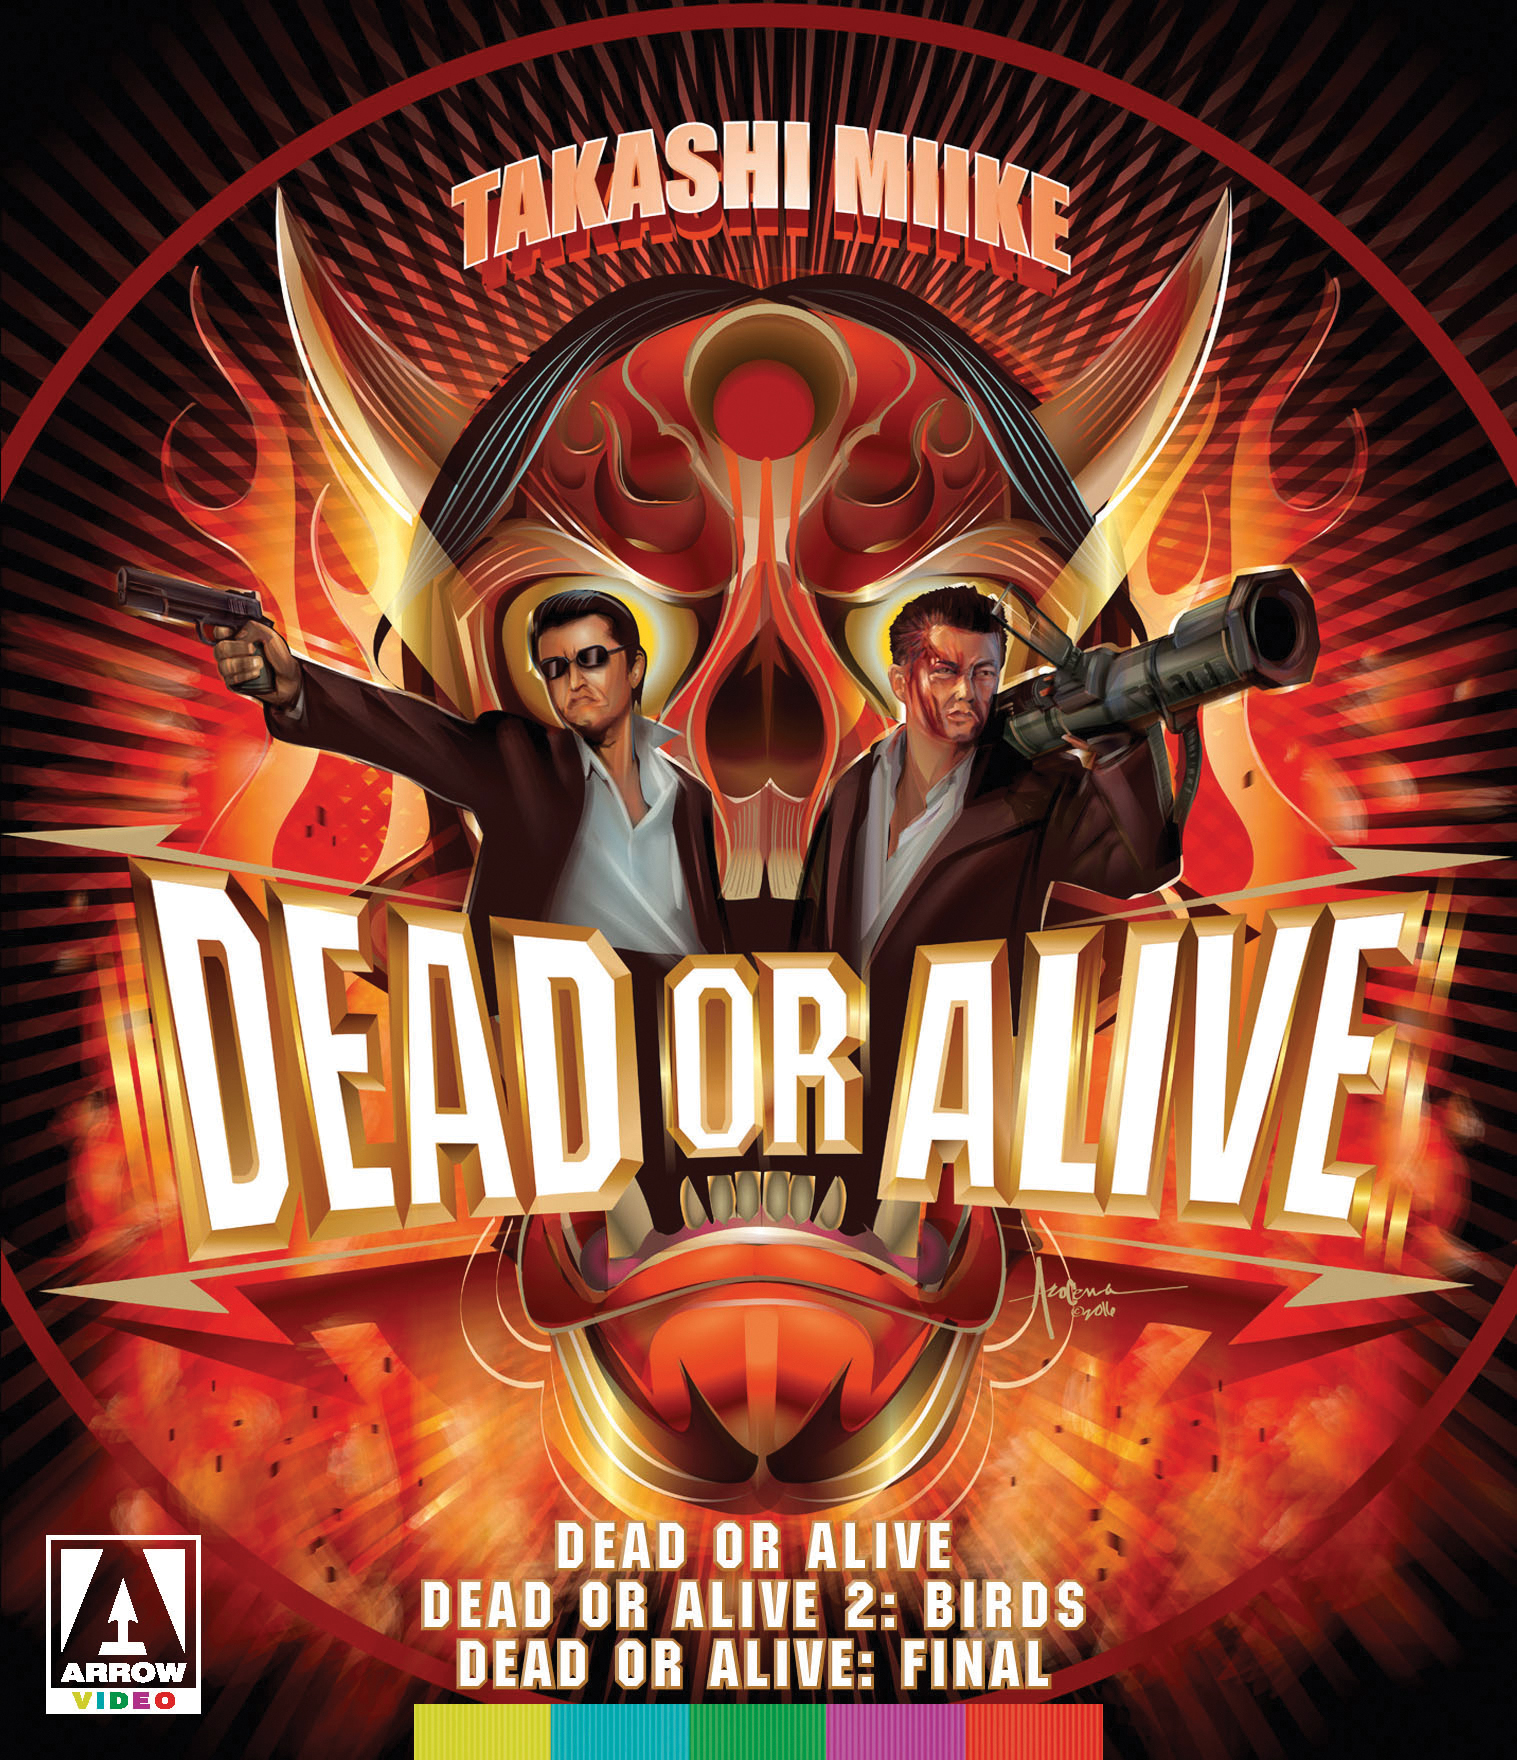 DVDFr - DOA - Dead Or Alive (Édition SteelBook) - Blu-ray